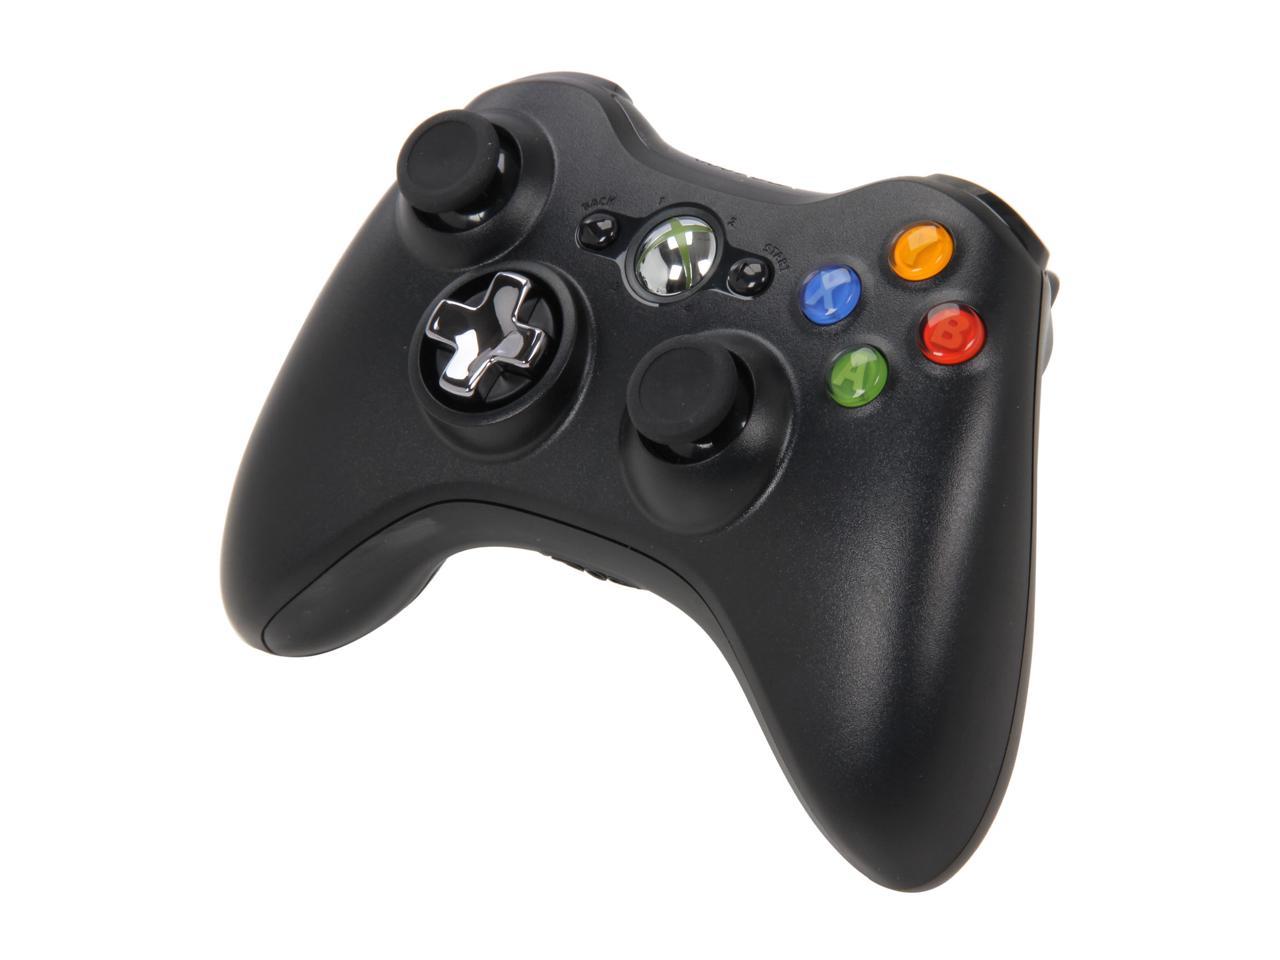 Xbox 360 play. Беспроводной контроллер Xbox 360 через Play. Xbox 360 Wireless Controller via Play & charge Kit. Клавиатура для Xbox 360. Xbox 360 Wireless Controller via Play charge Kit как подключить к ПК.